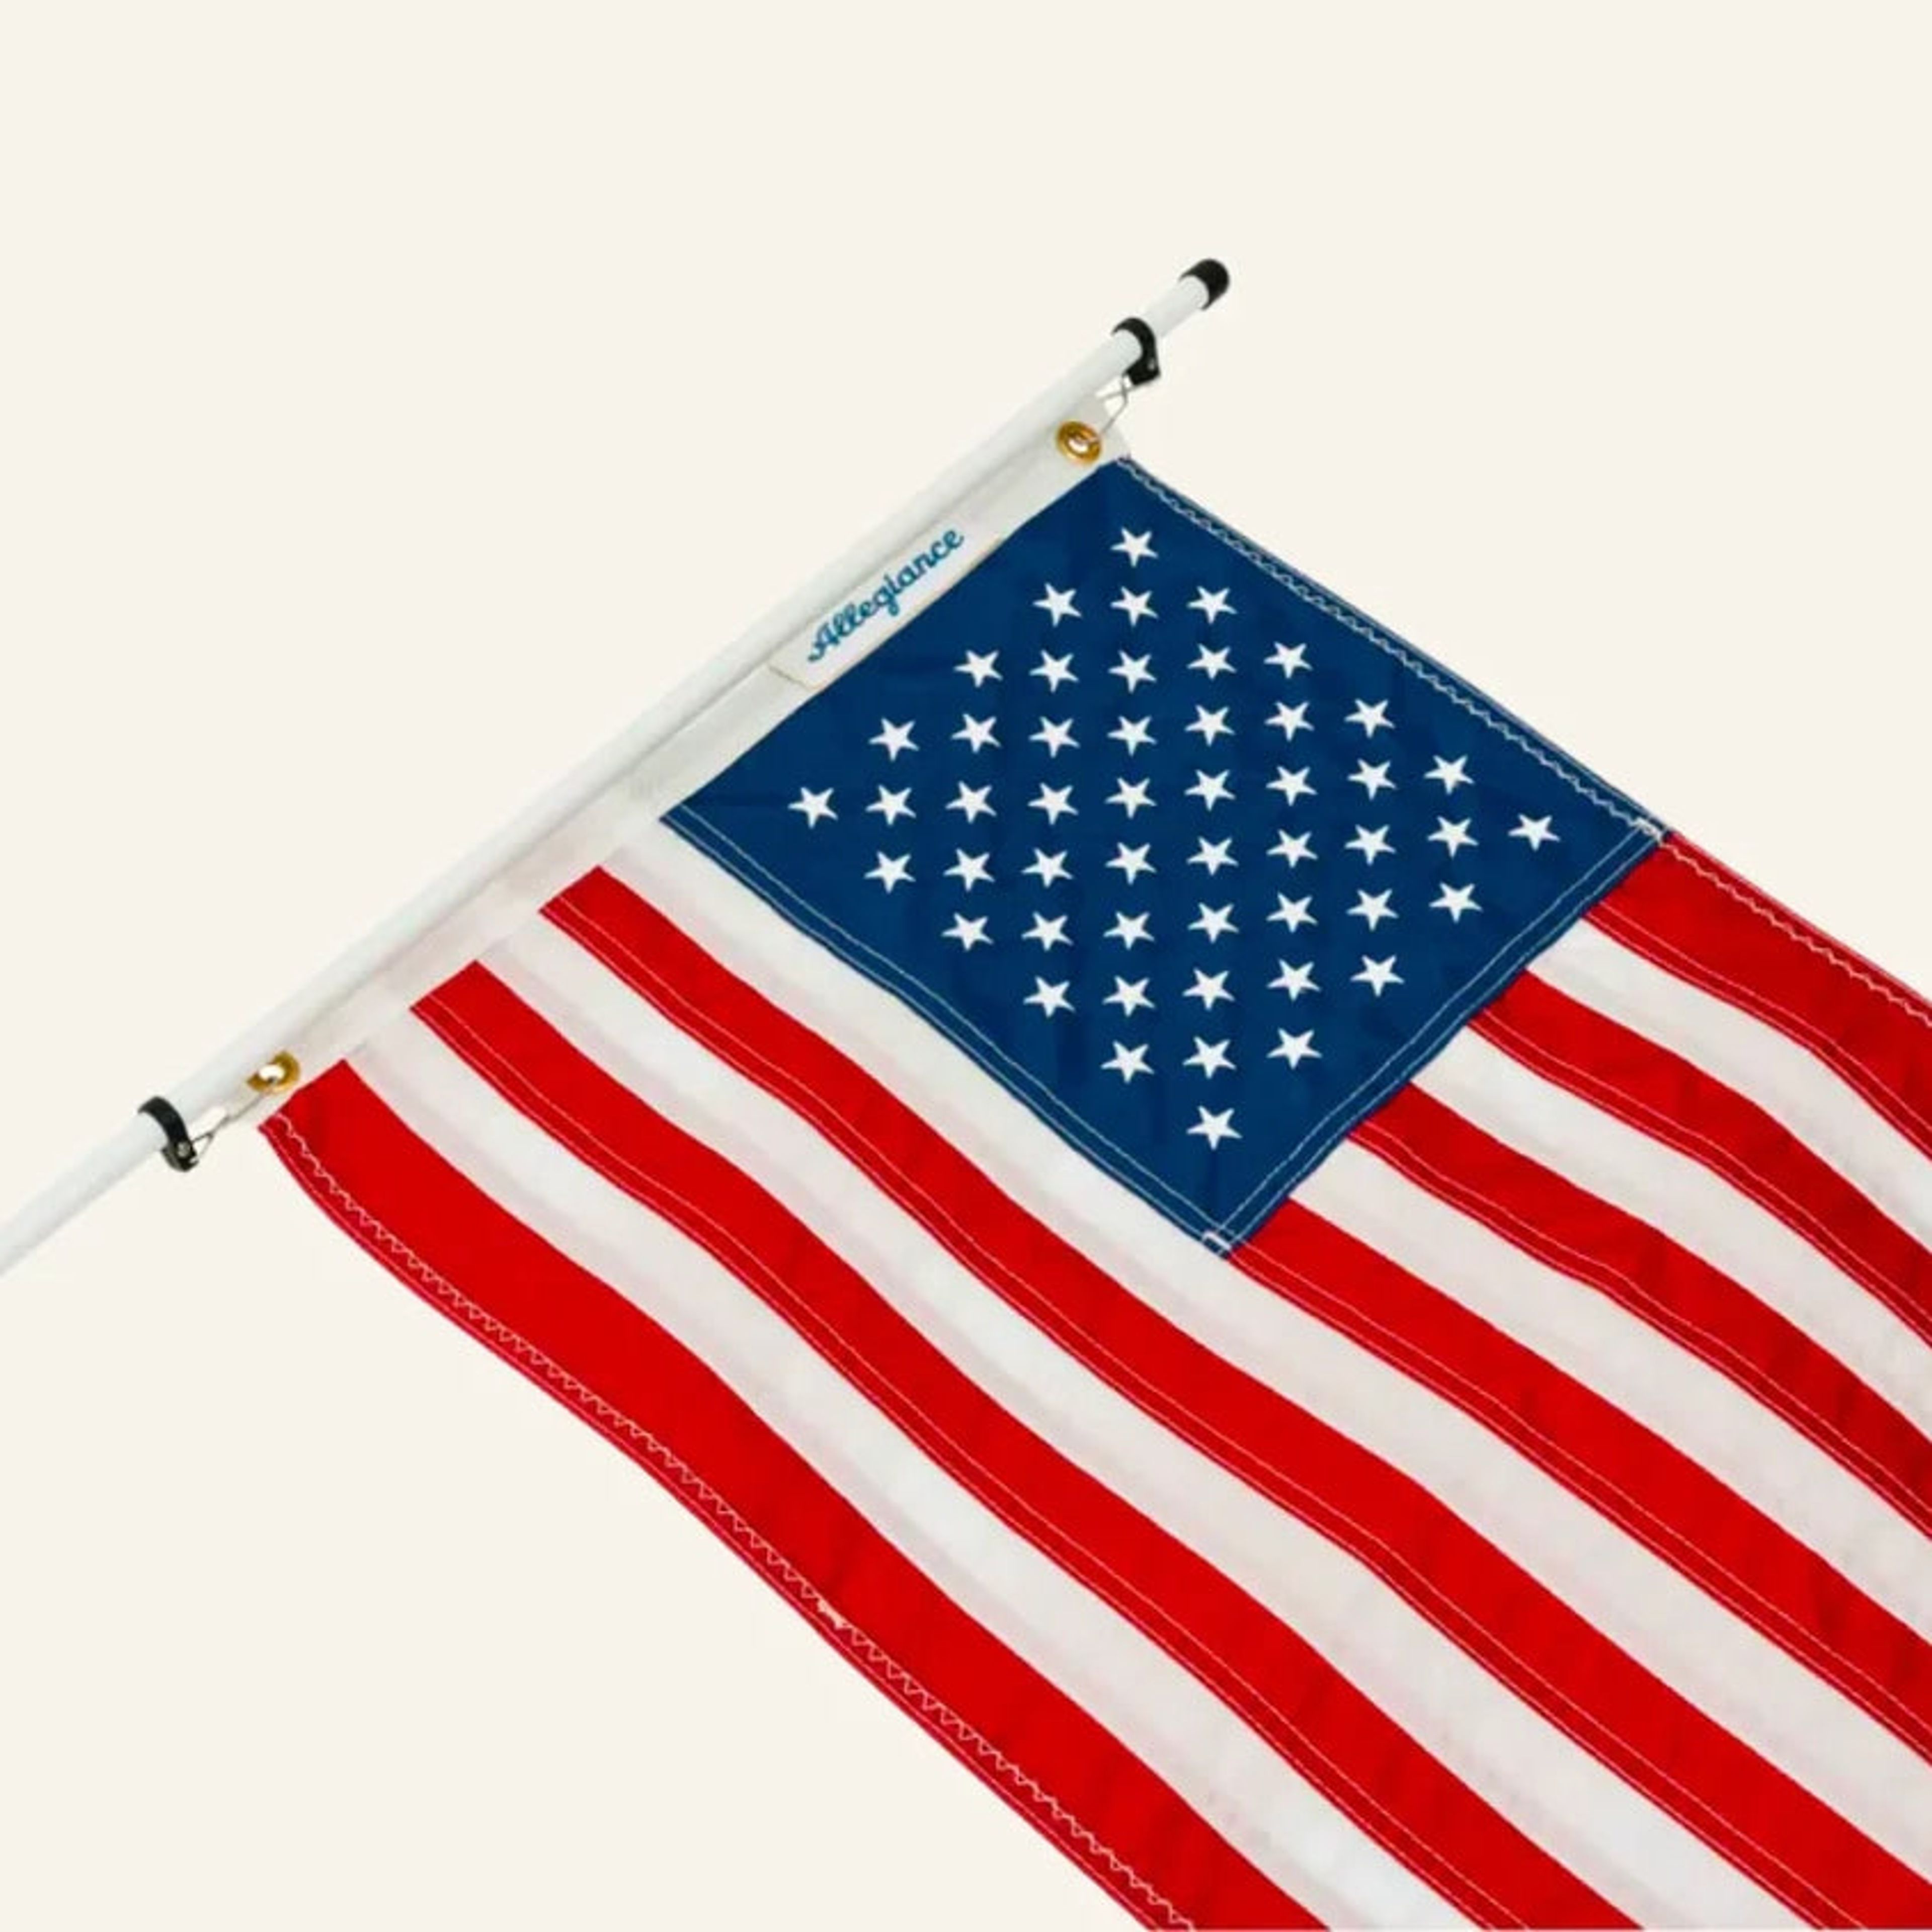 16" x 24" American Flag